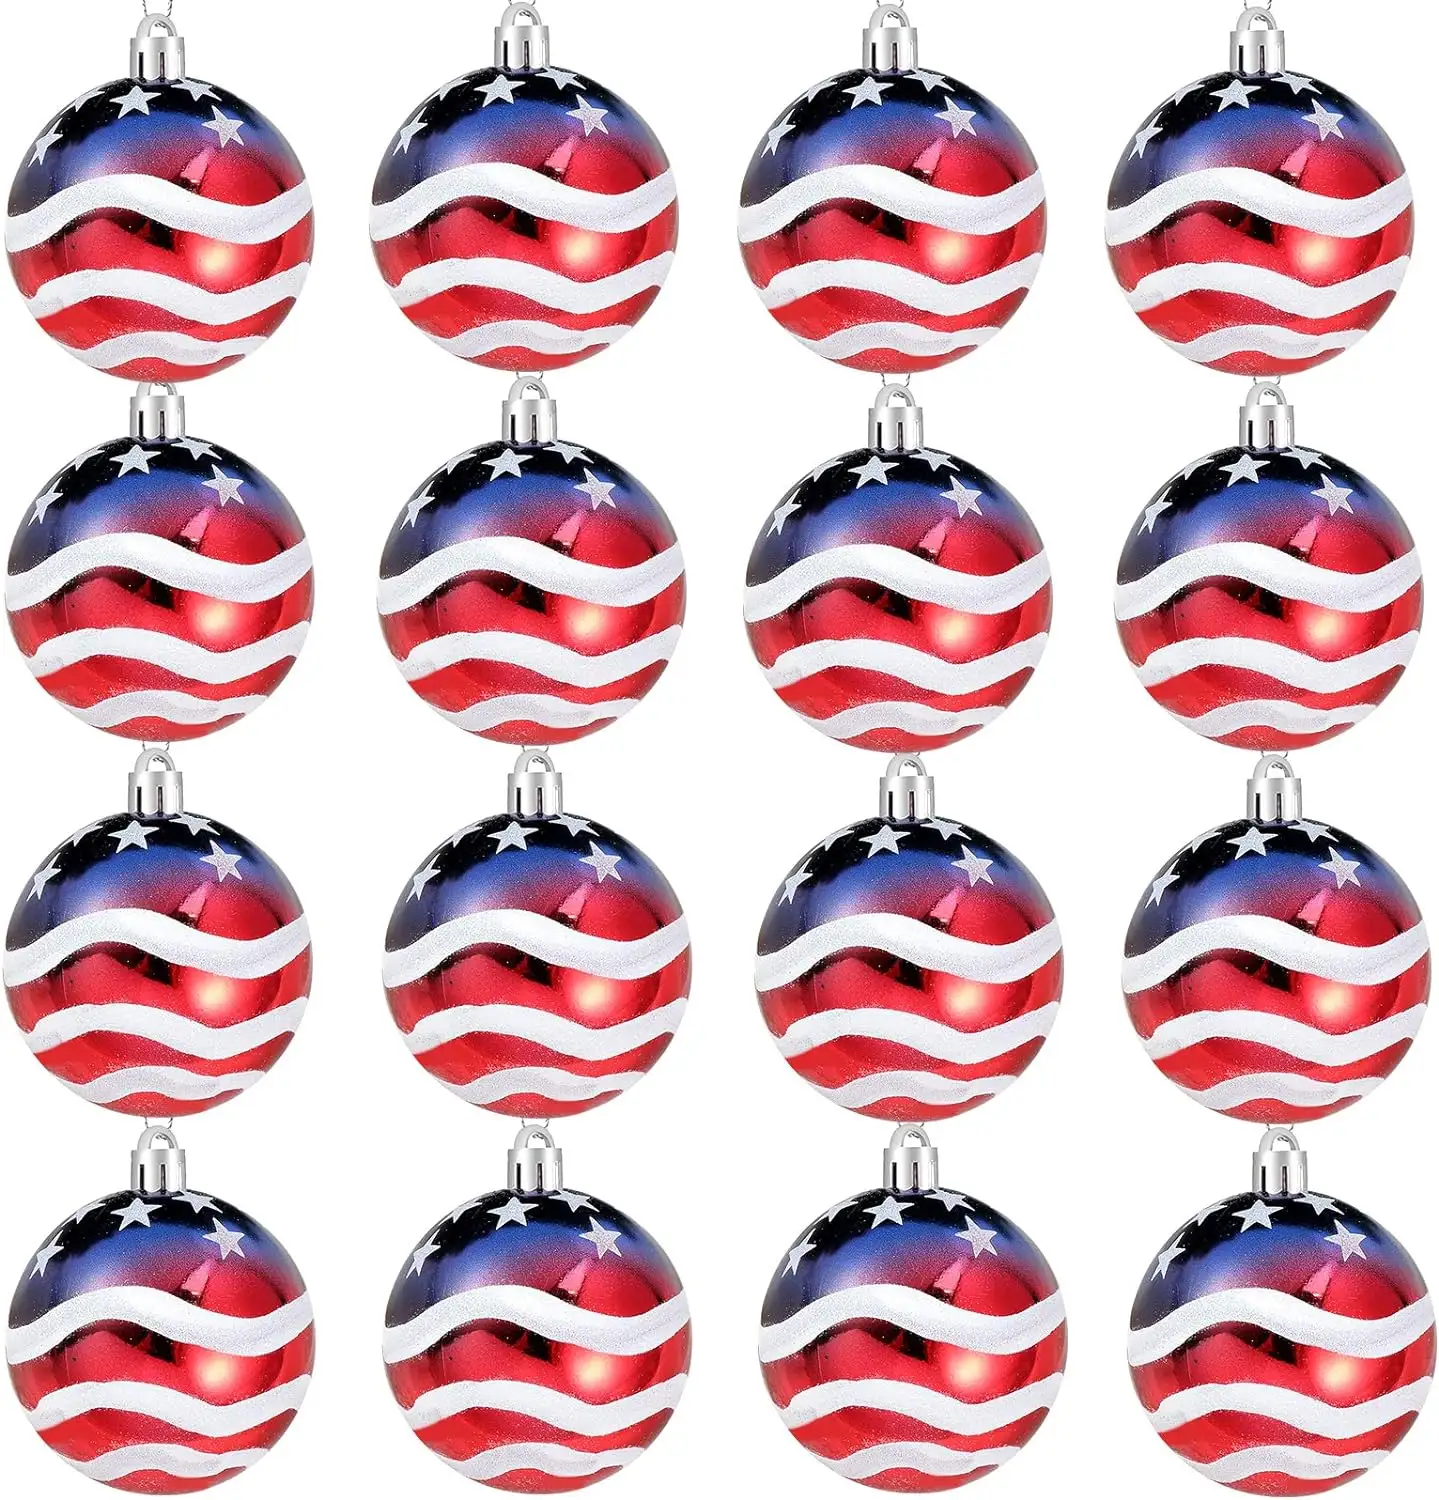 12pcs Ornaments Balls Christmas America Flag Design Painted Plastic Christmas Ball Set For Hanging Decorative Tree